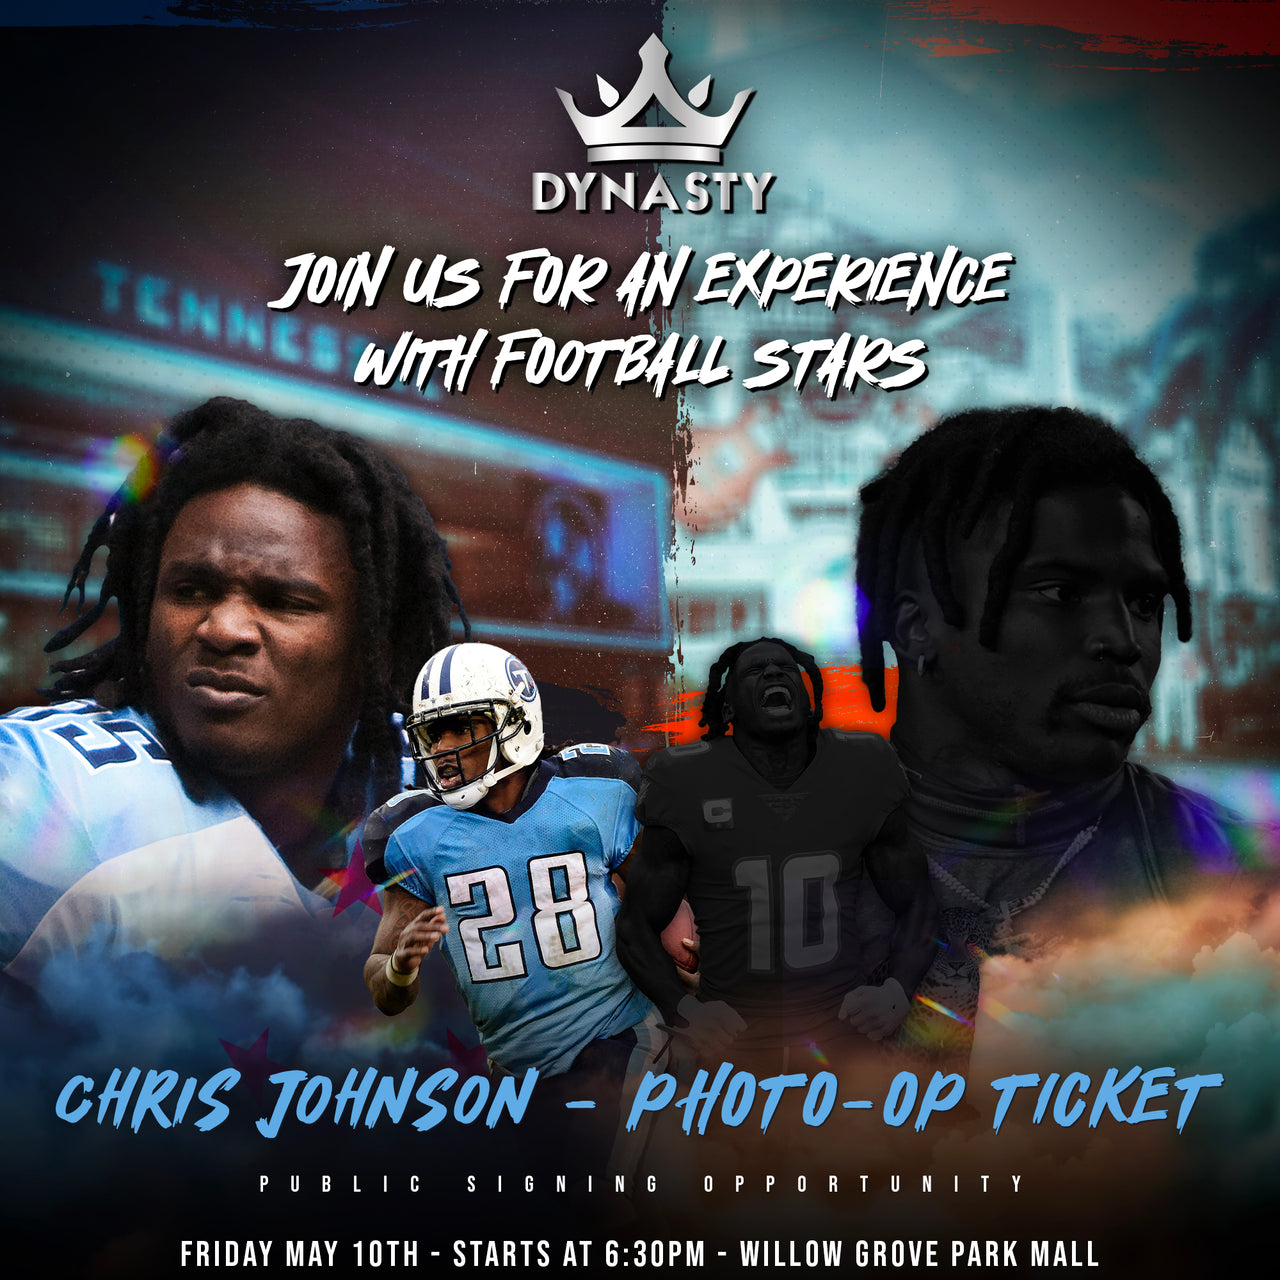 Chris Johnson Titans Meet & Greet Experience Tickets